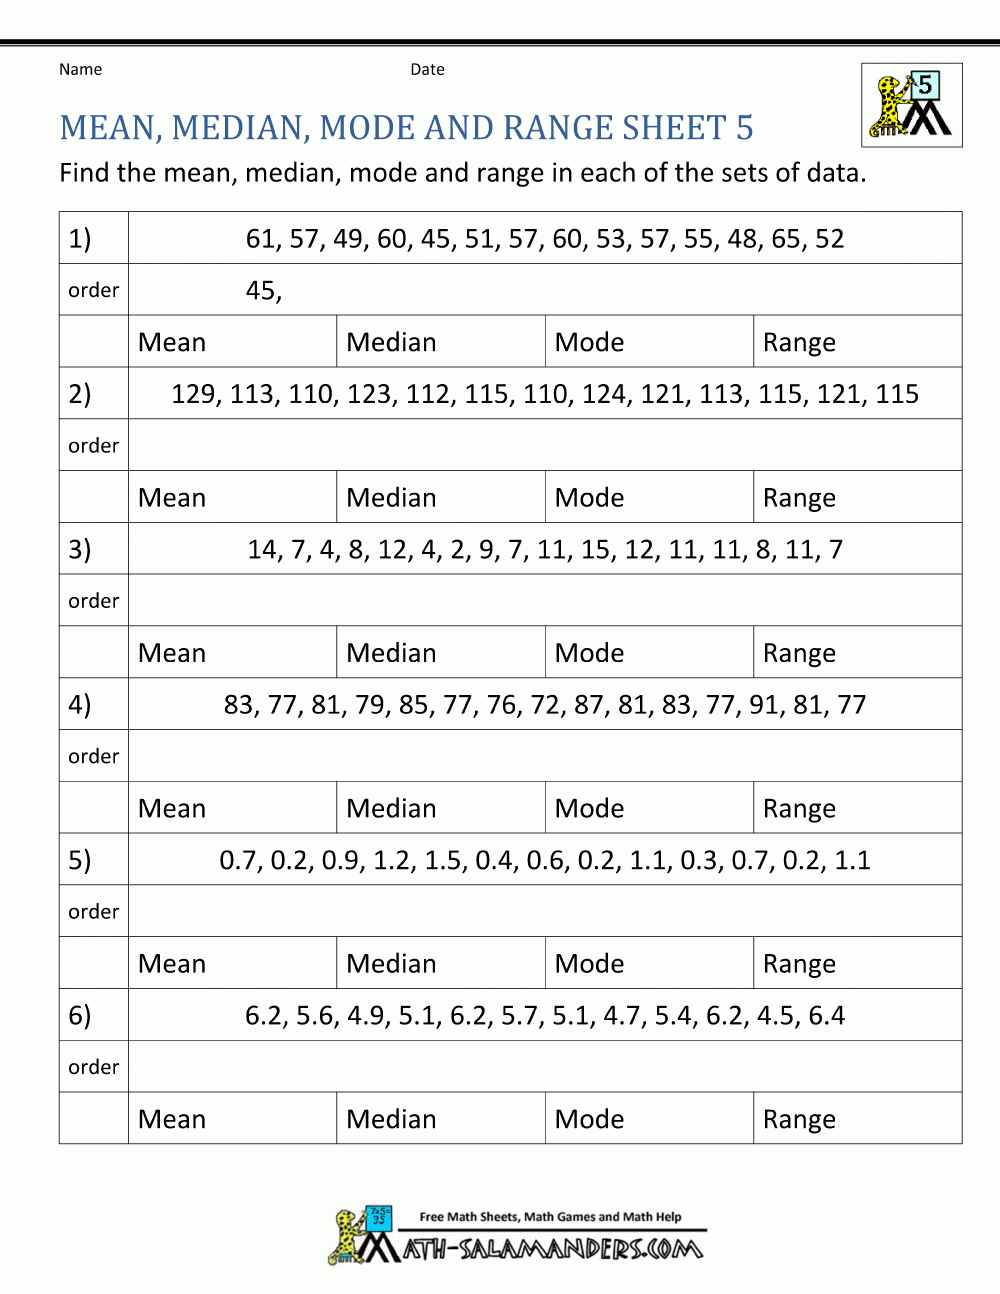 Mean Median Mode Range Worksheets Throughout Mean Median Mode And Range Worksheets